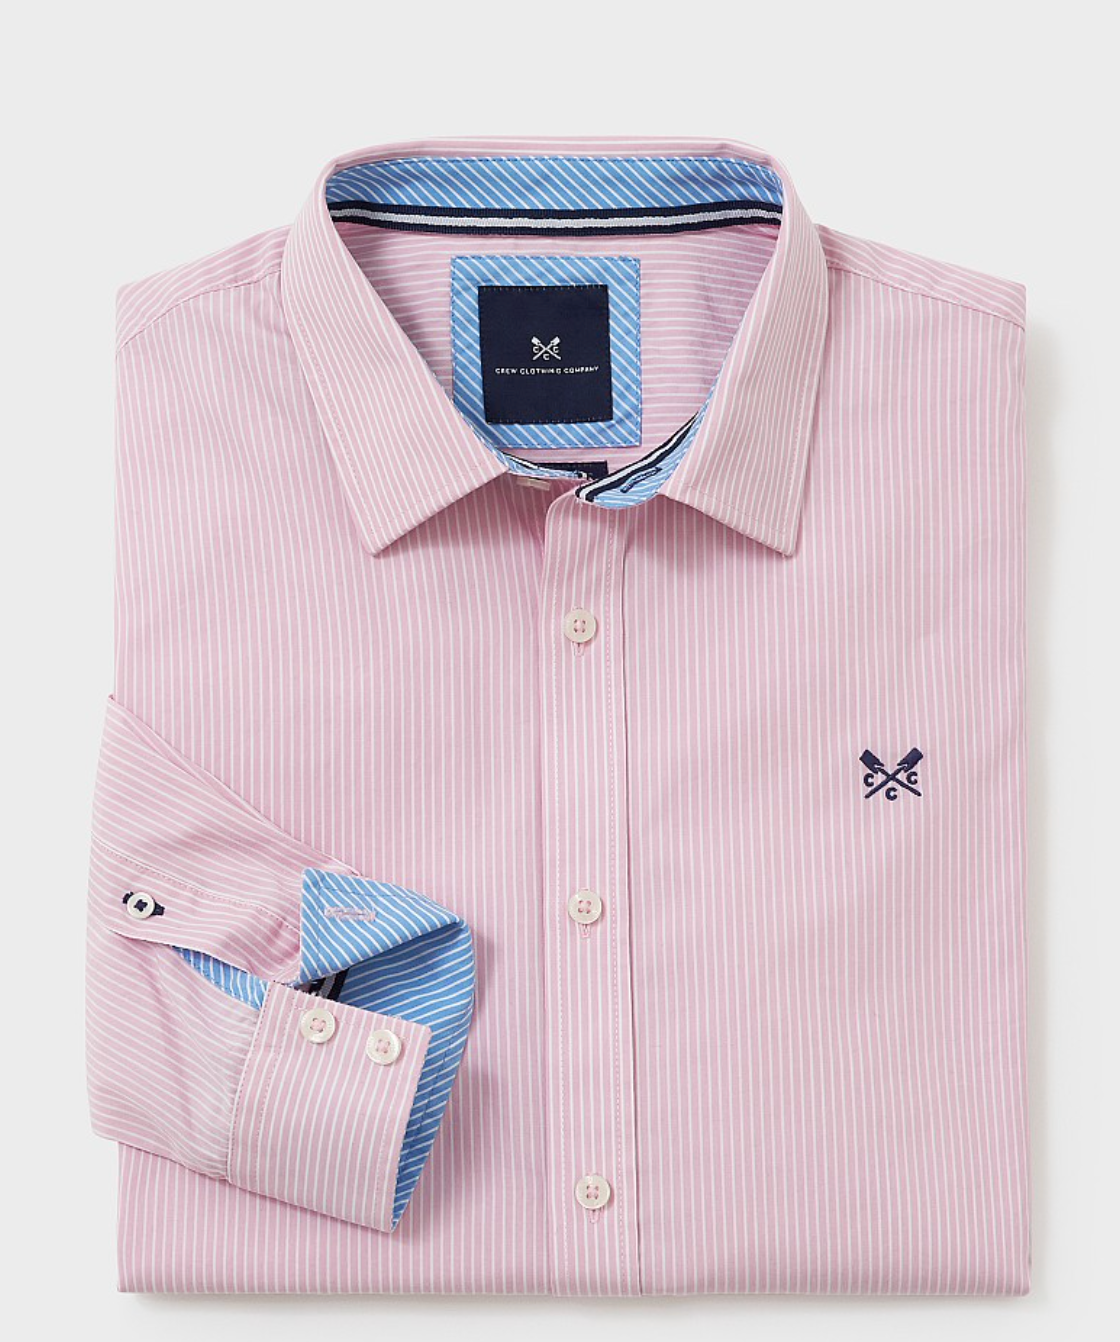 Crew - Classic Fit Micro Stripe Shirt - Pink - MLB006